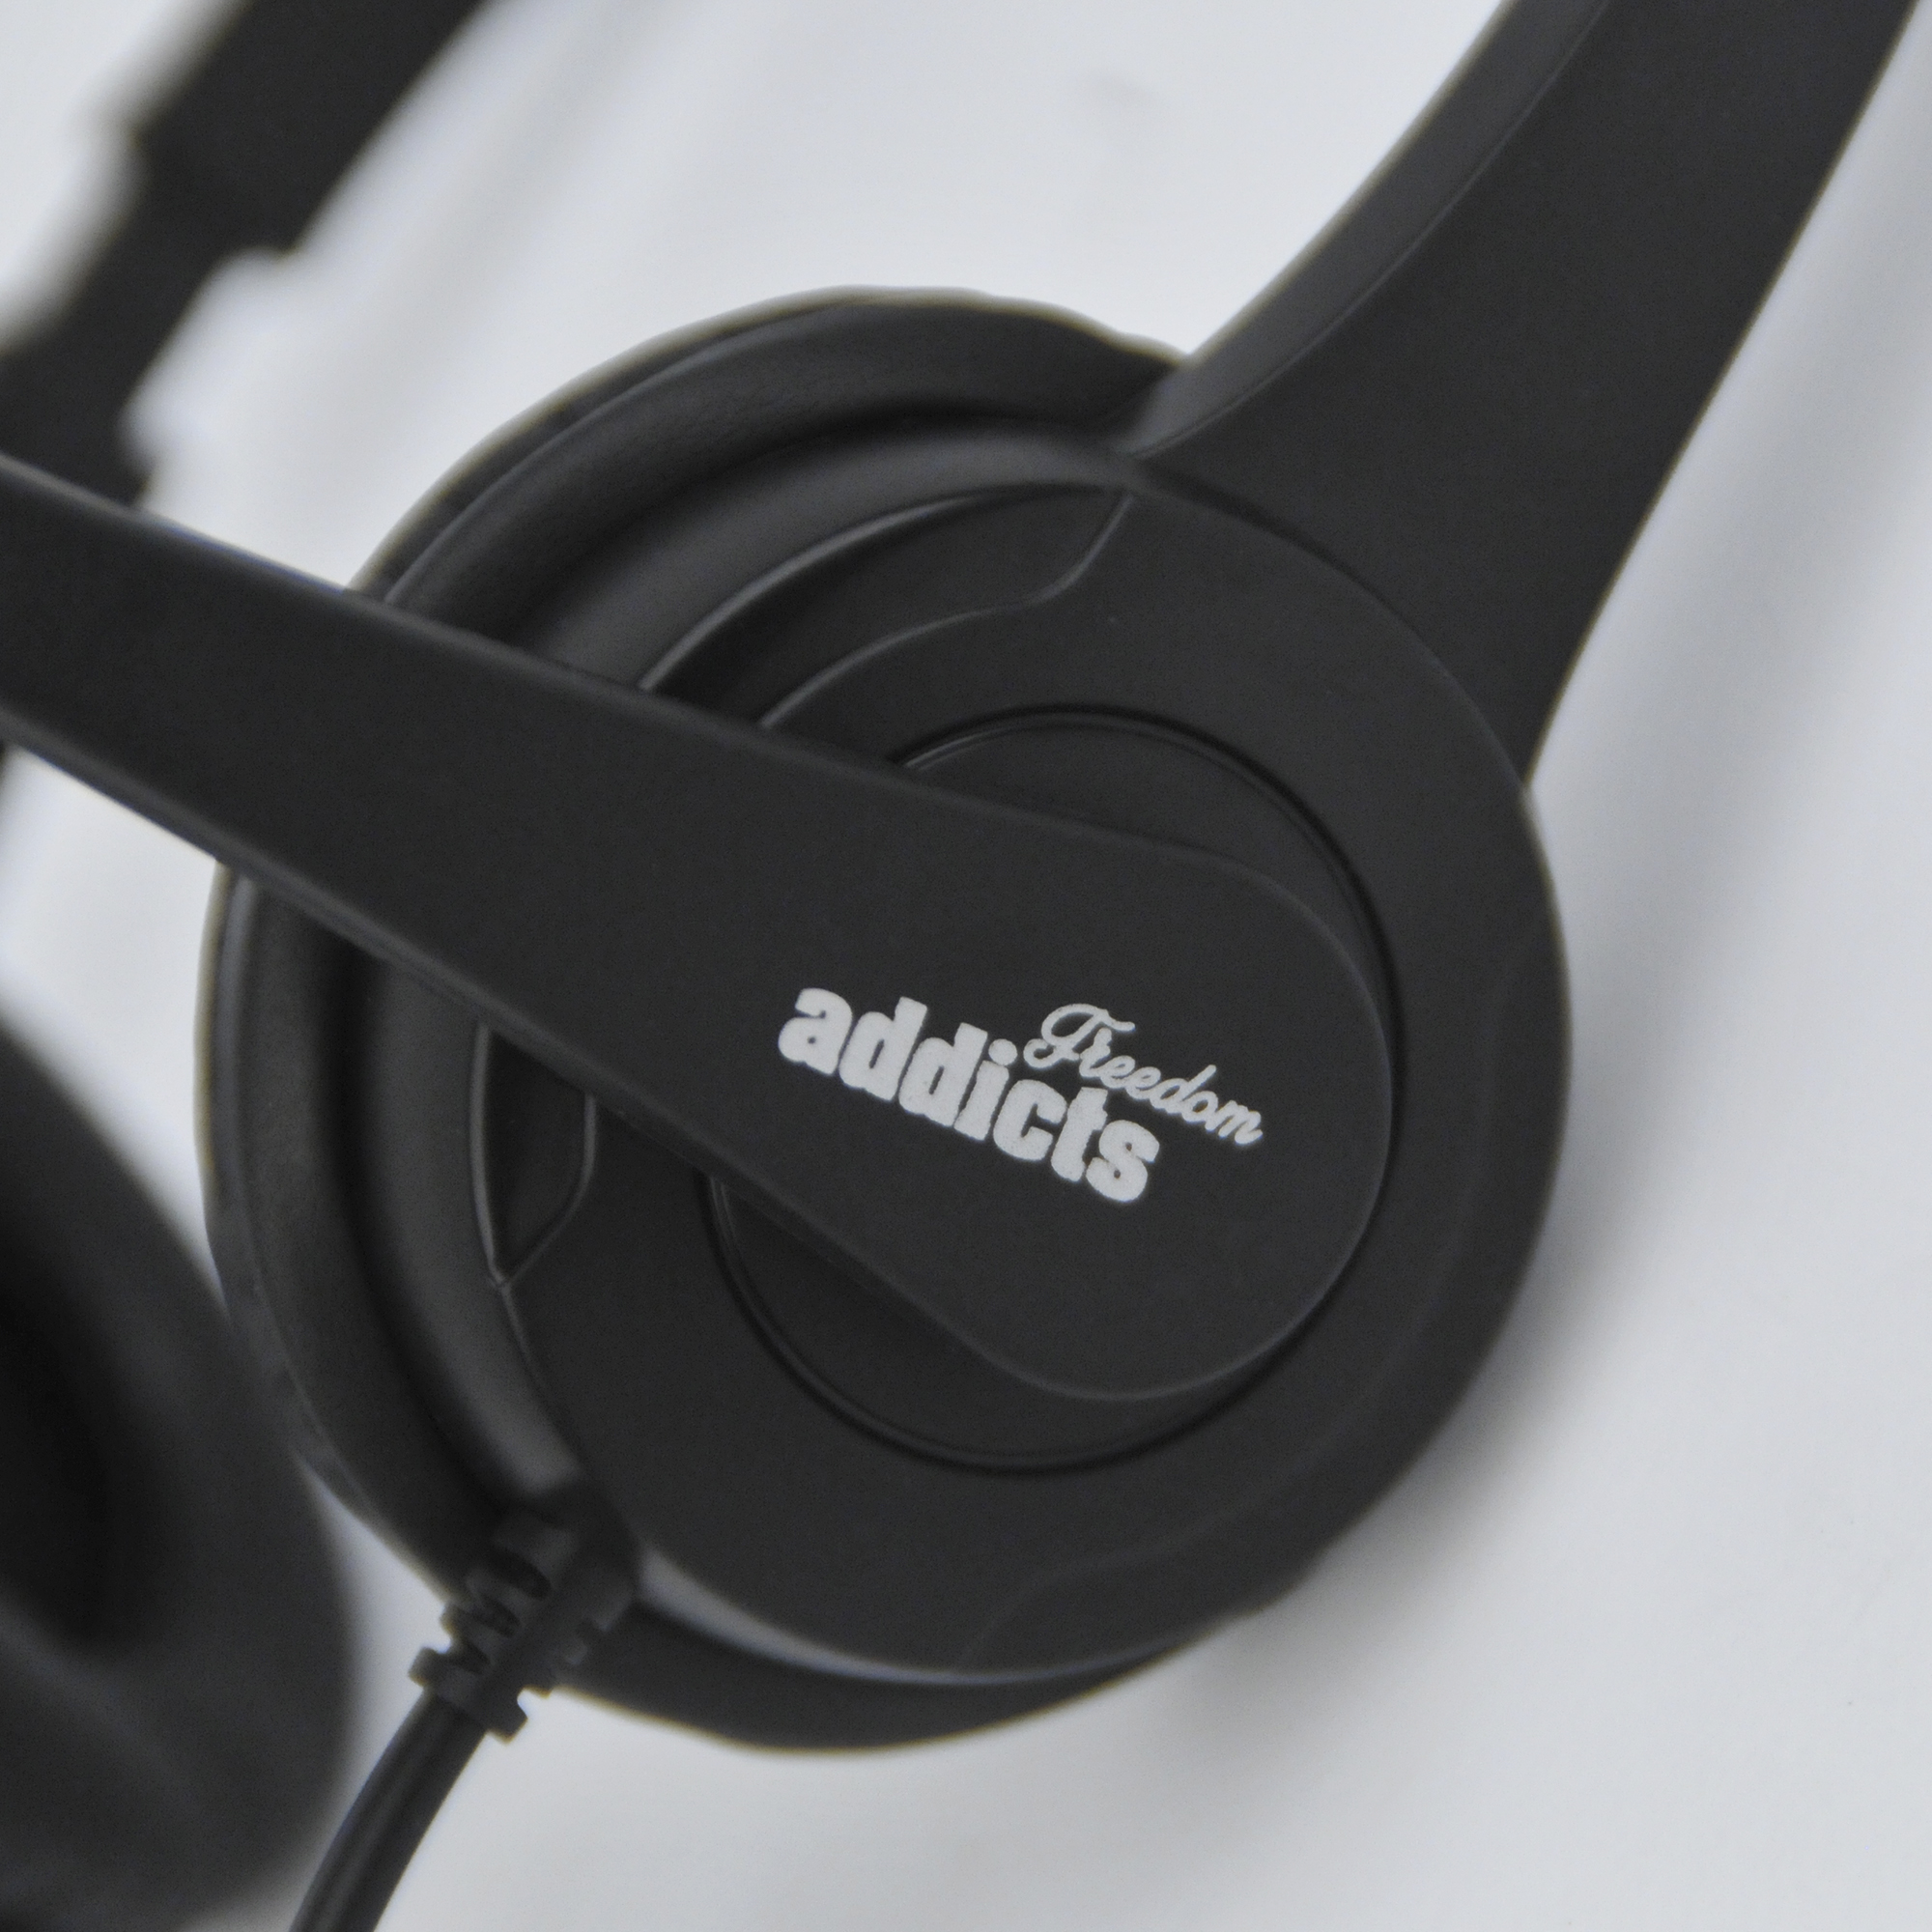 Schwarz Headset mit Over-ear NGS Mikrofon VOX505USB,